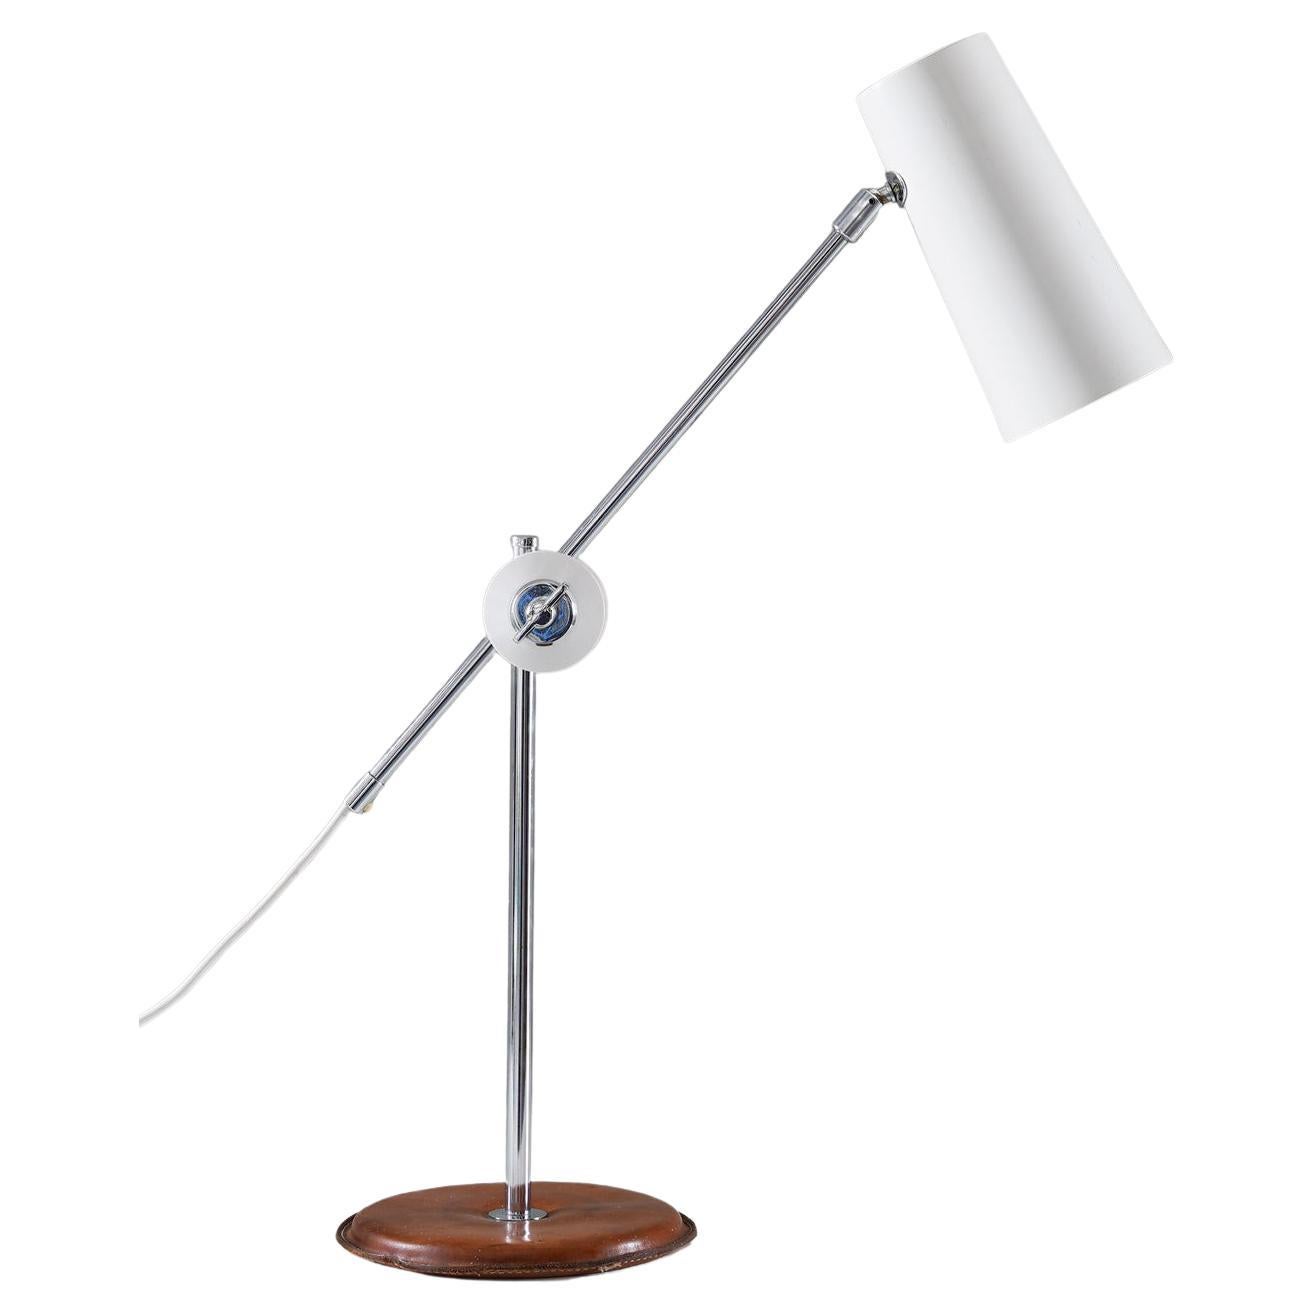 Scandinavian Midcentury Table Lamp by Ateljé Lyktan